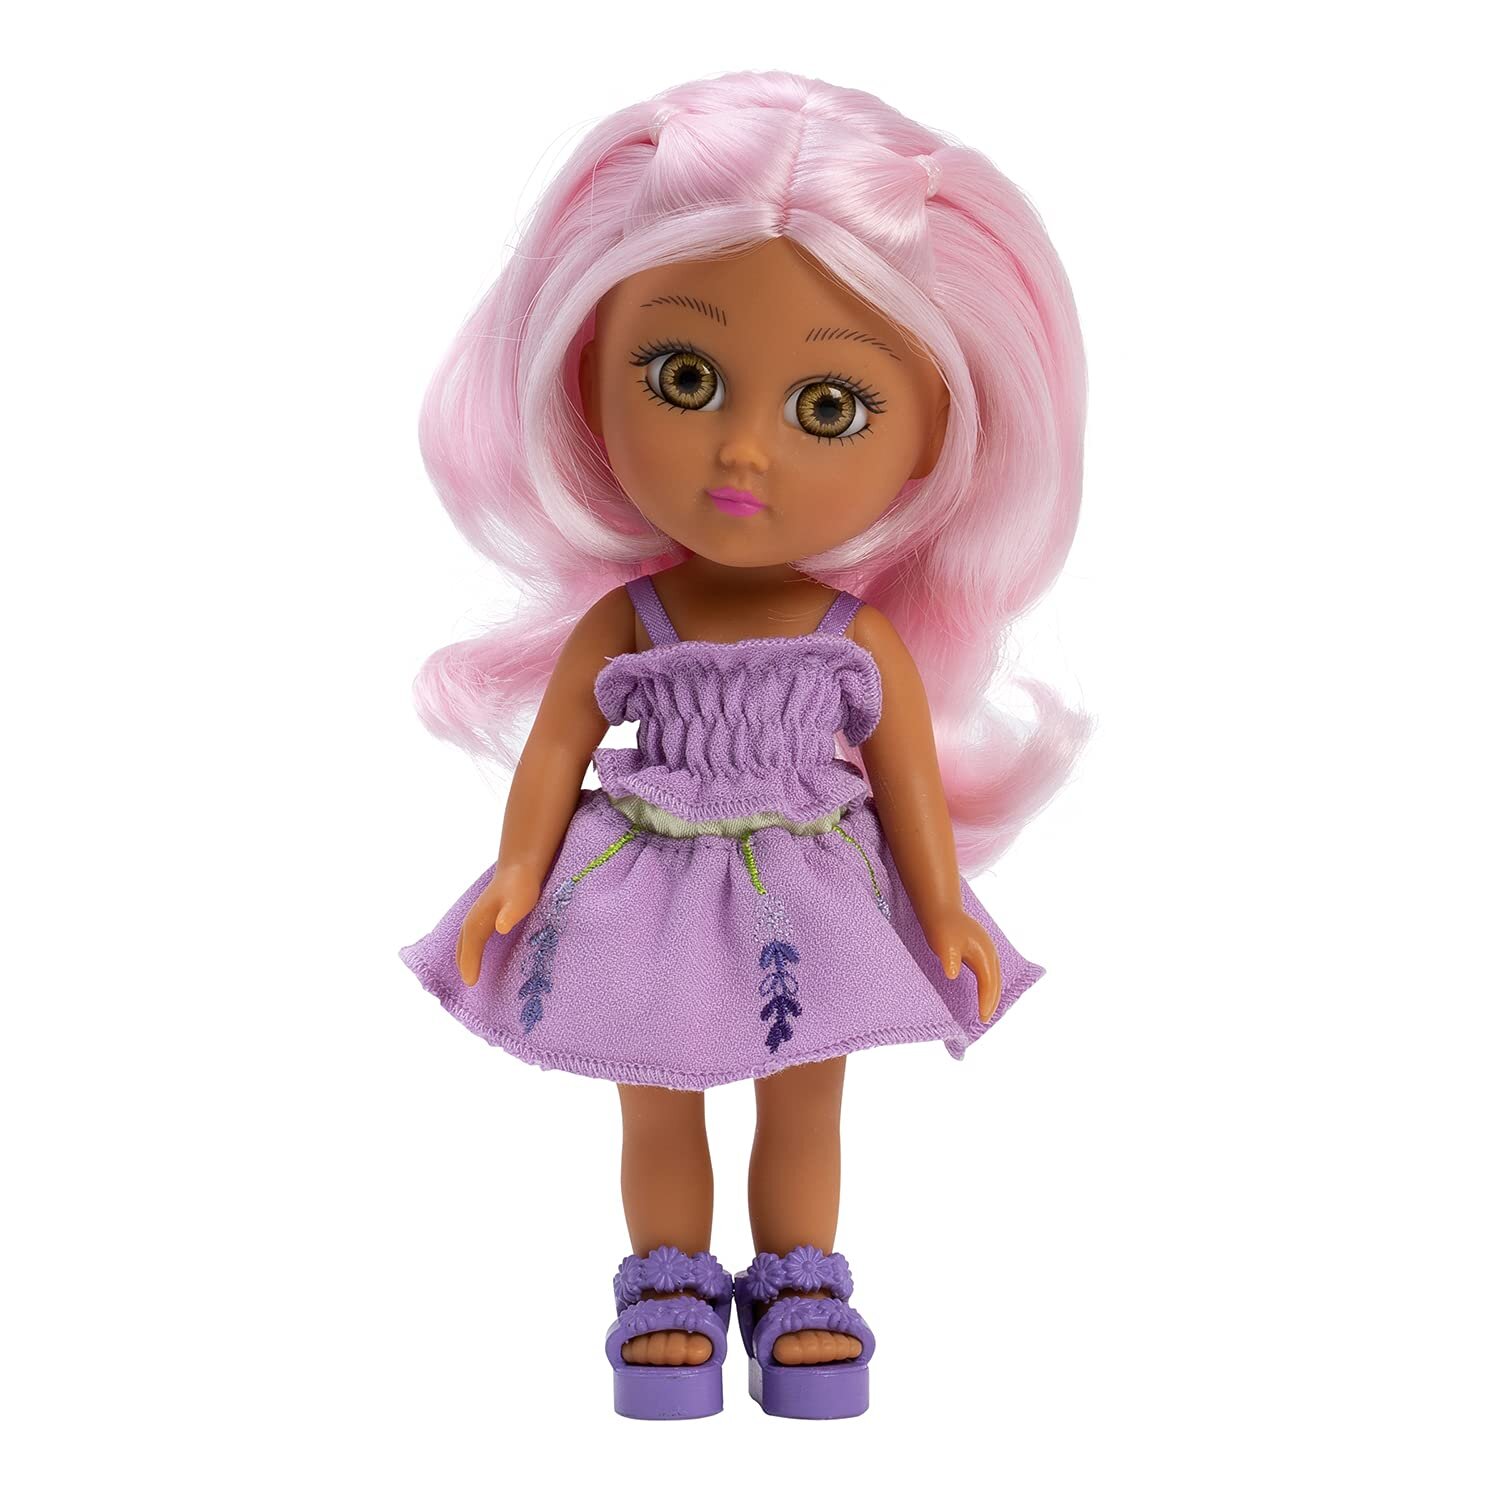 Adora Fairy garden Friends - 6 inch Interactive Doll with Magical Hair - Lavender